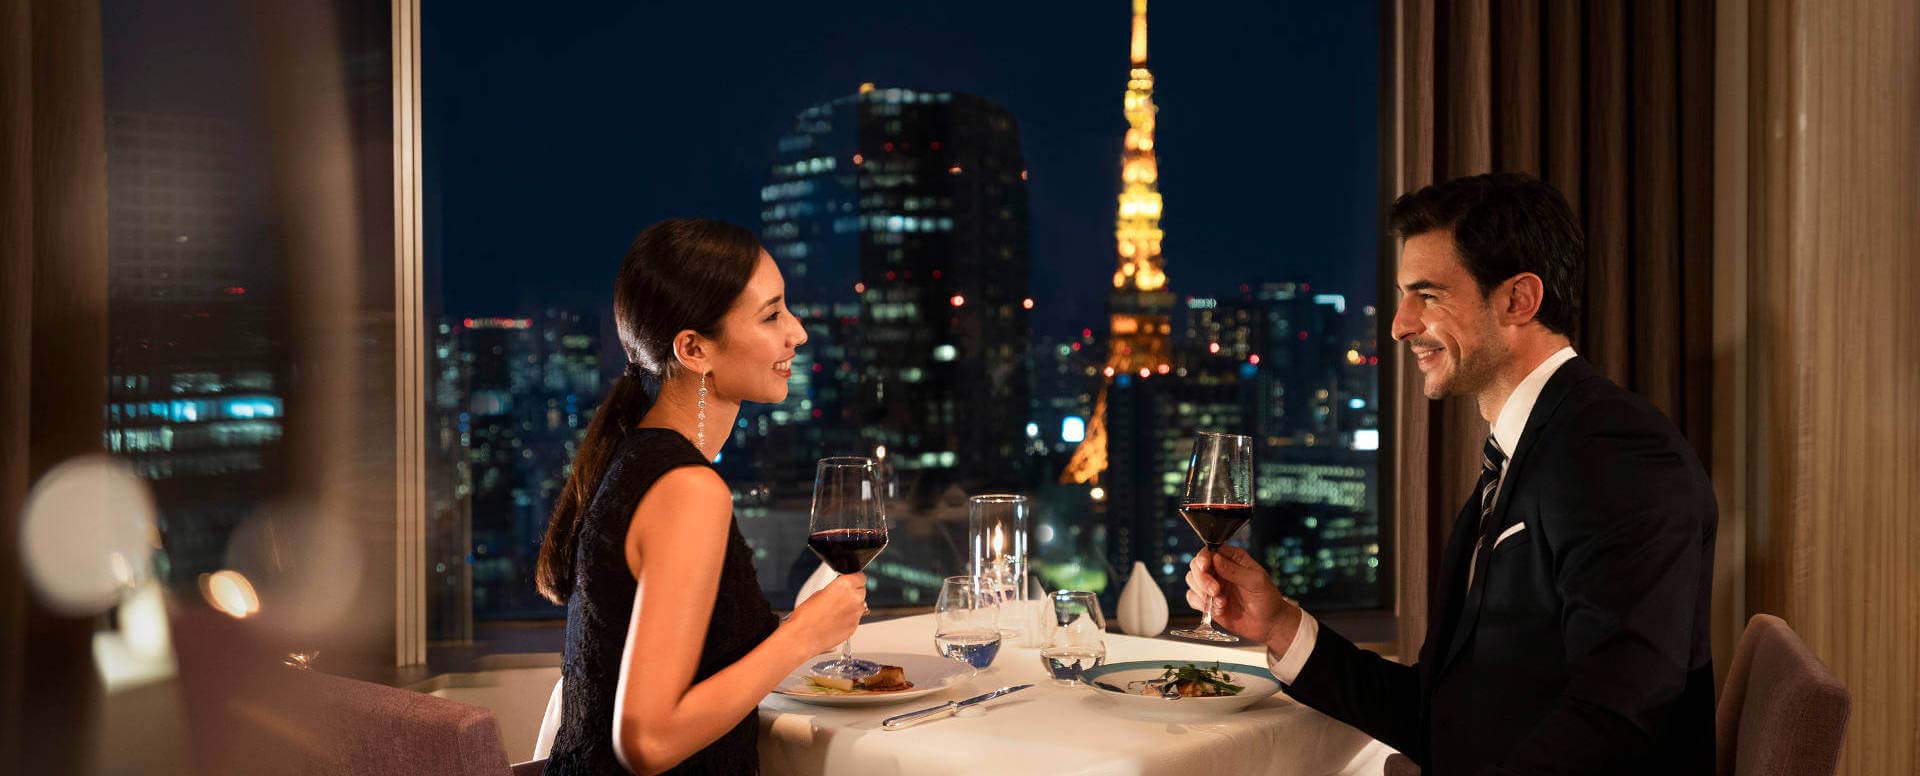 Best Restaurants Bars Ana Intercontinental Tokyo